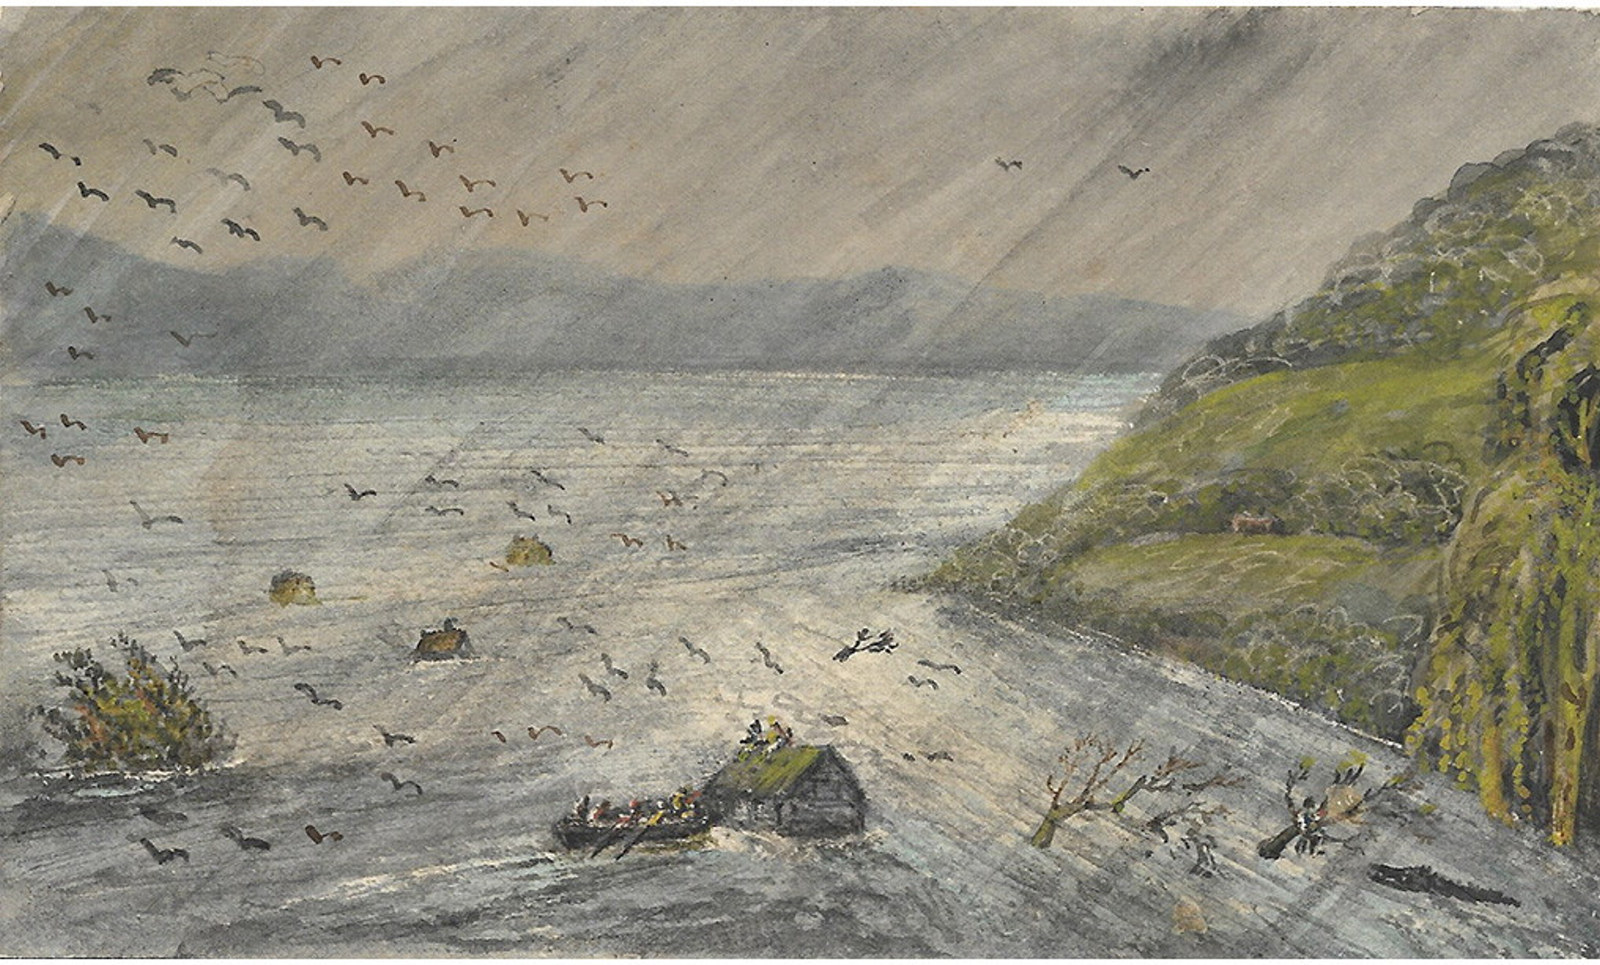 Illustration no.31: Margaret's courage in the great flood / Richard Cobbold